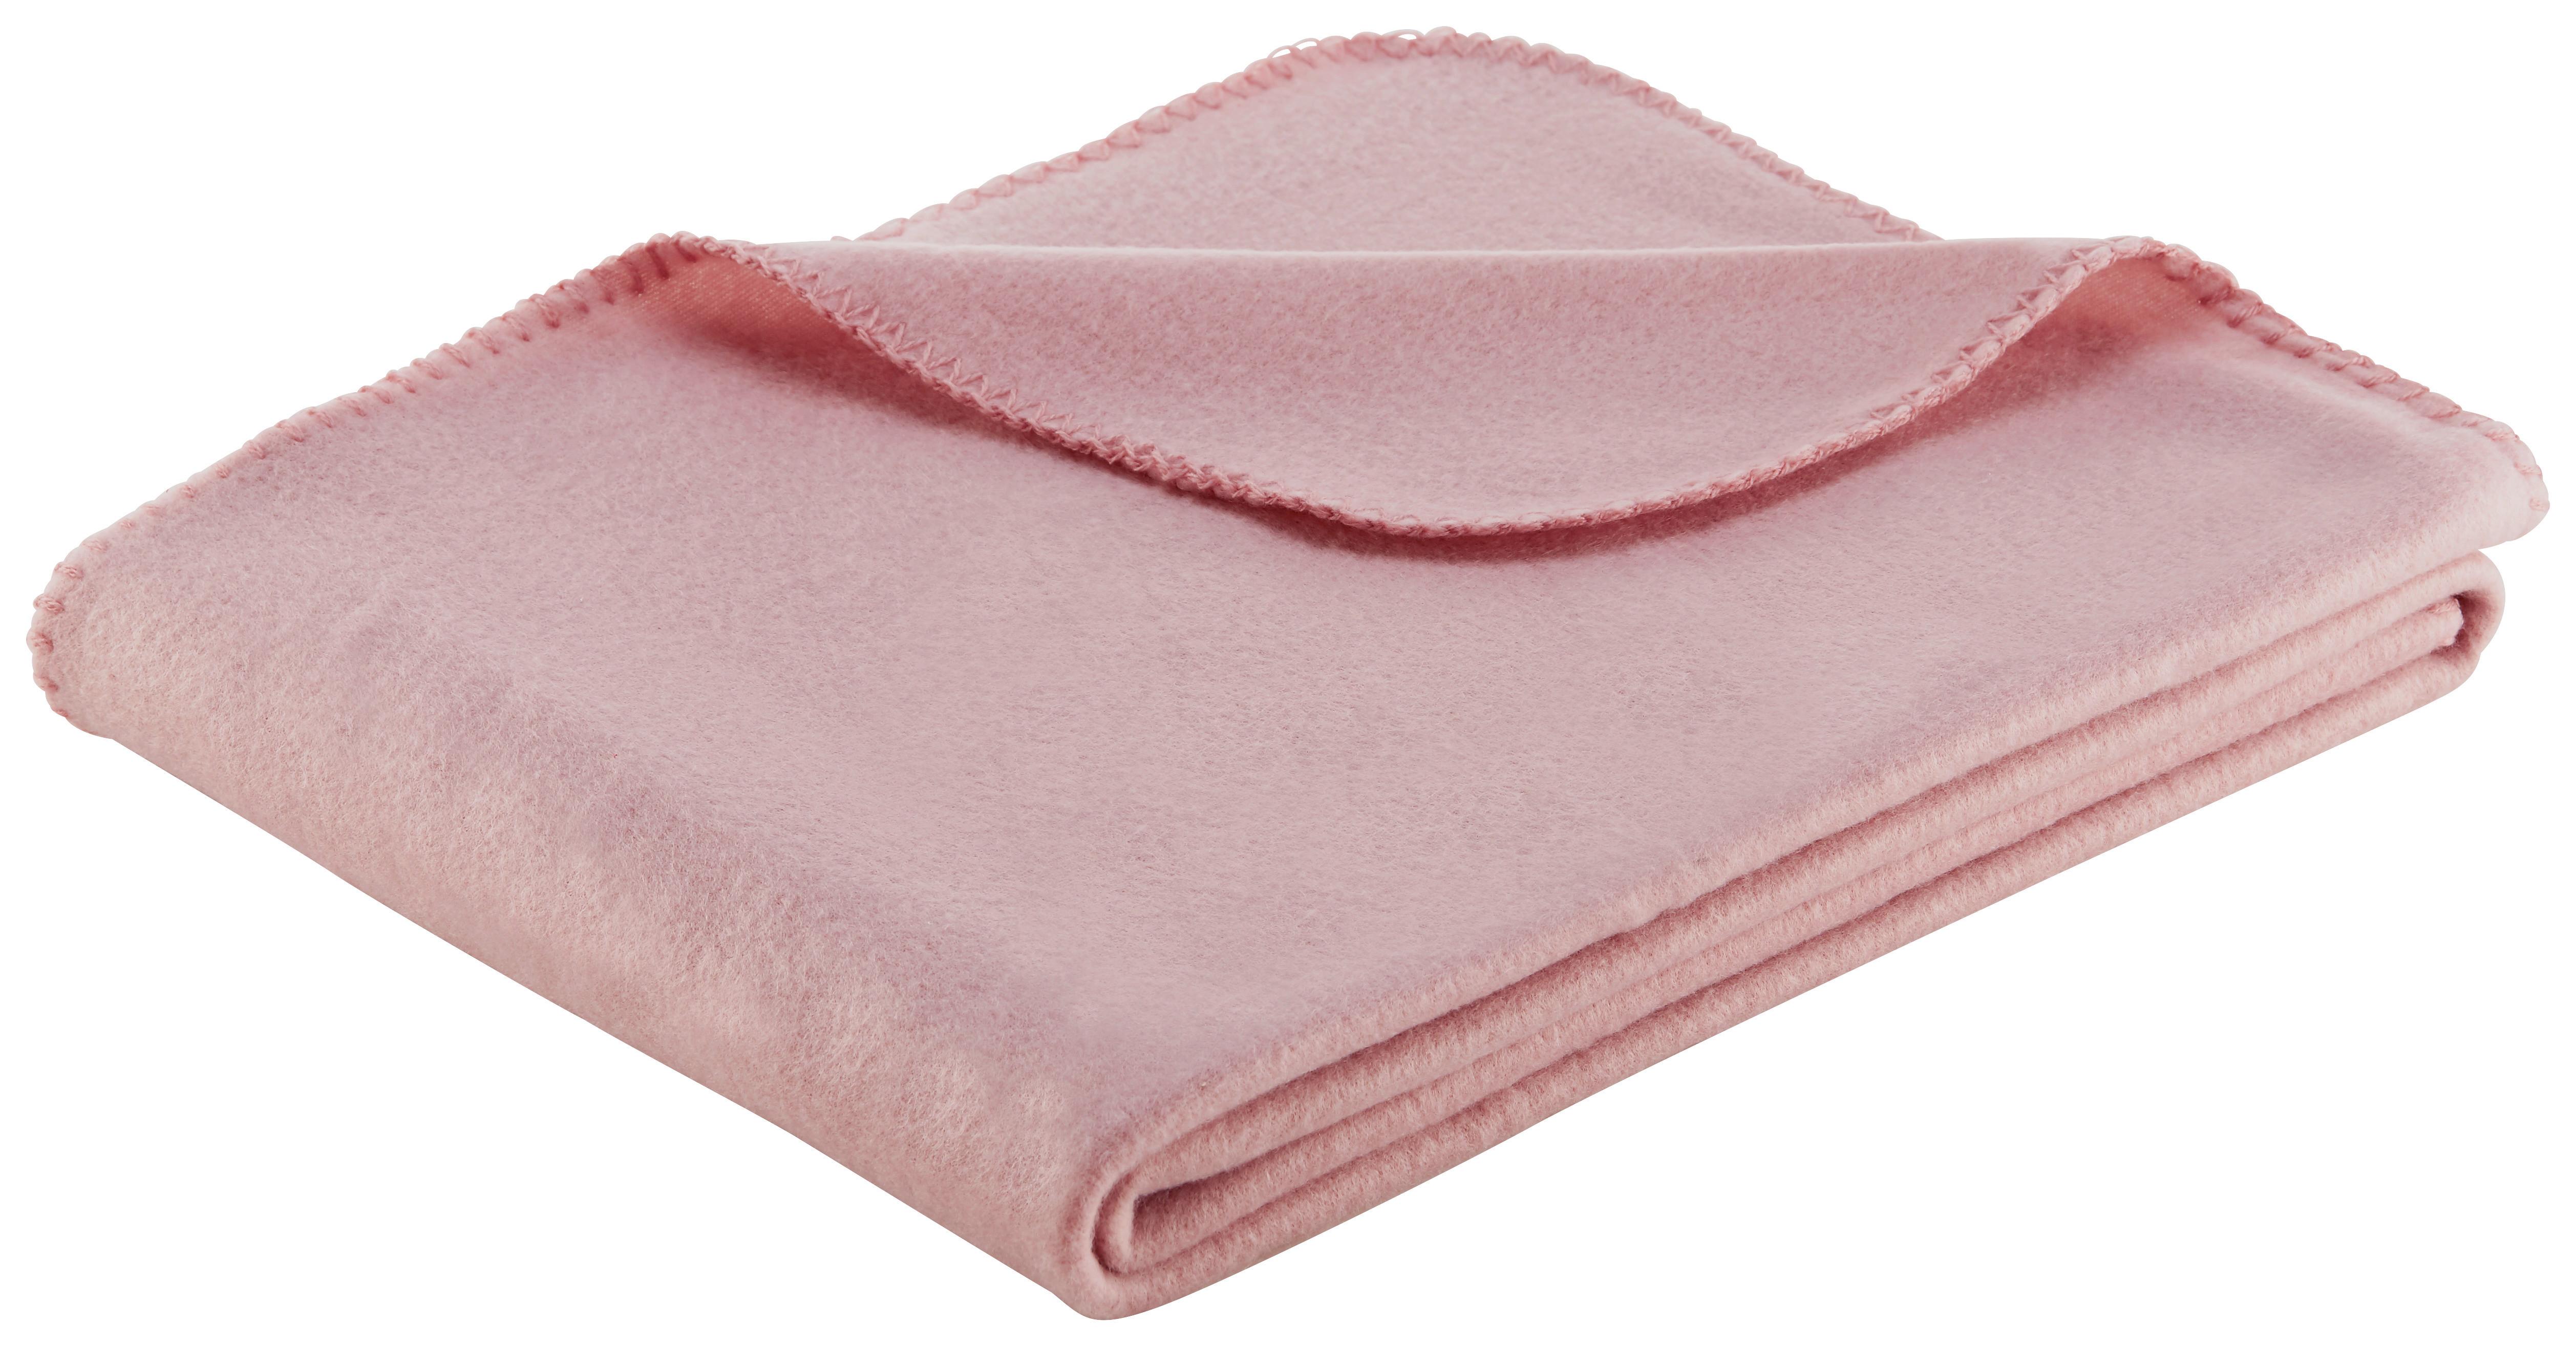 Fleecová Deka Beatrix 130/160 Cm - ružová, textil (130/160cm) - Based